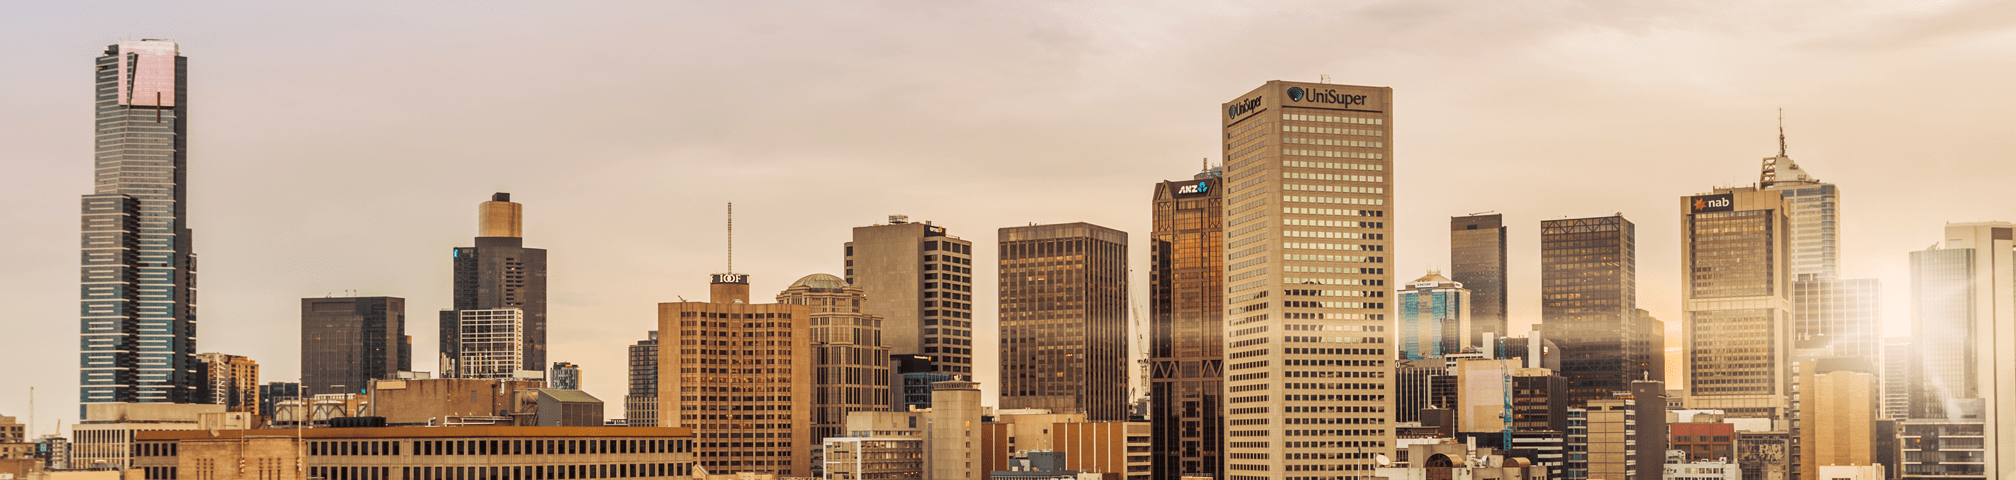 Melbourne skyline at dawn